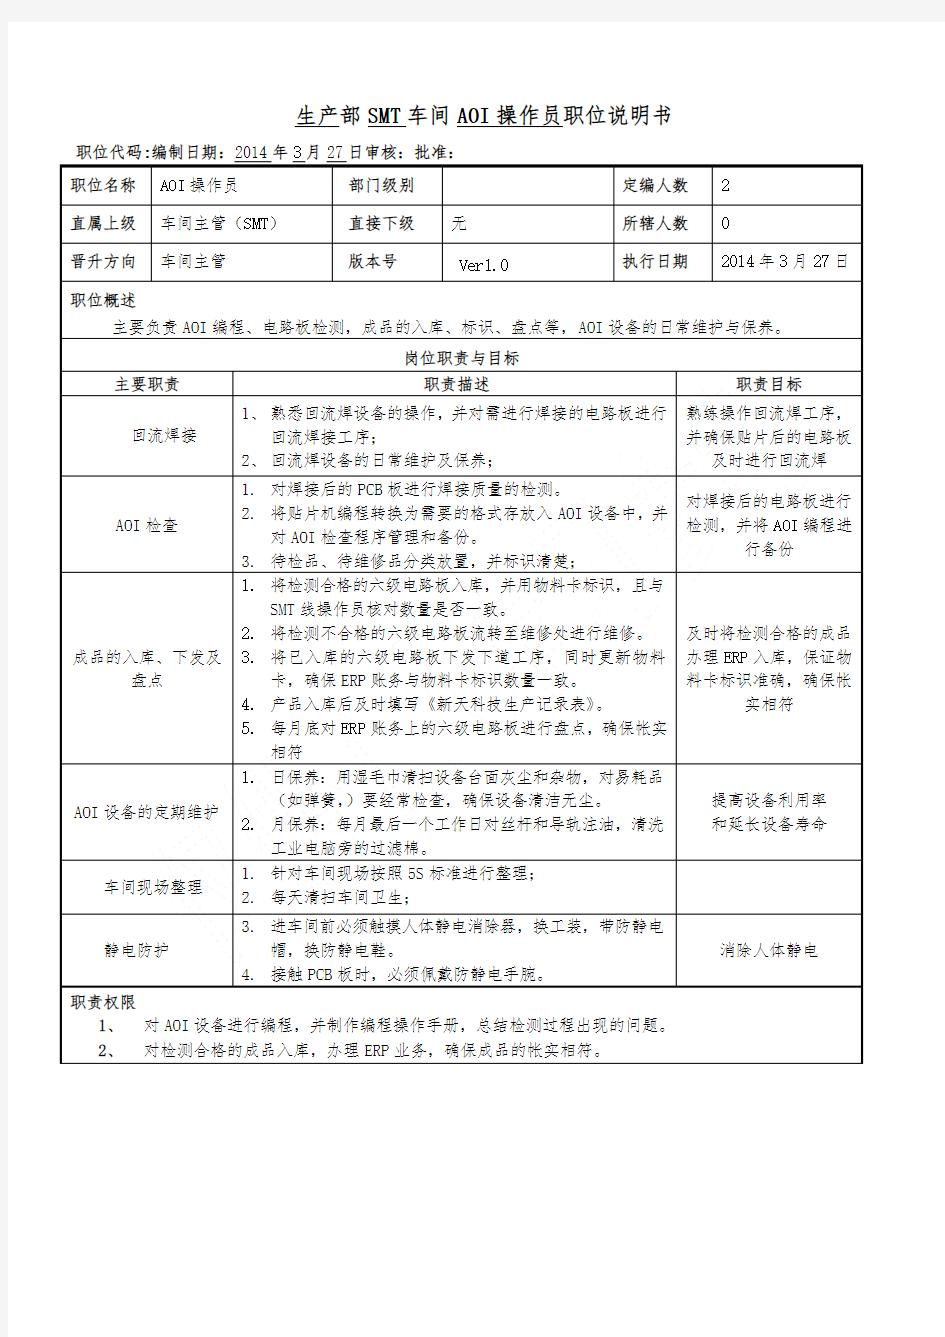 SMT车间职位说明书-AOI操作员(20140326)